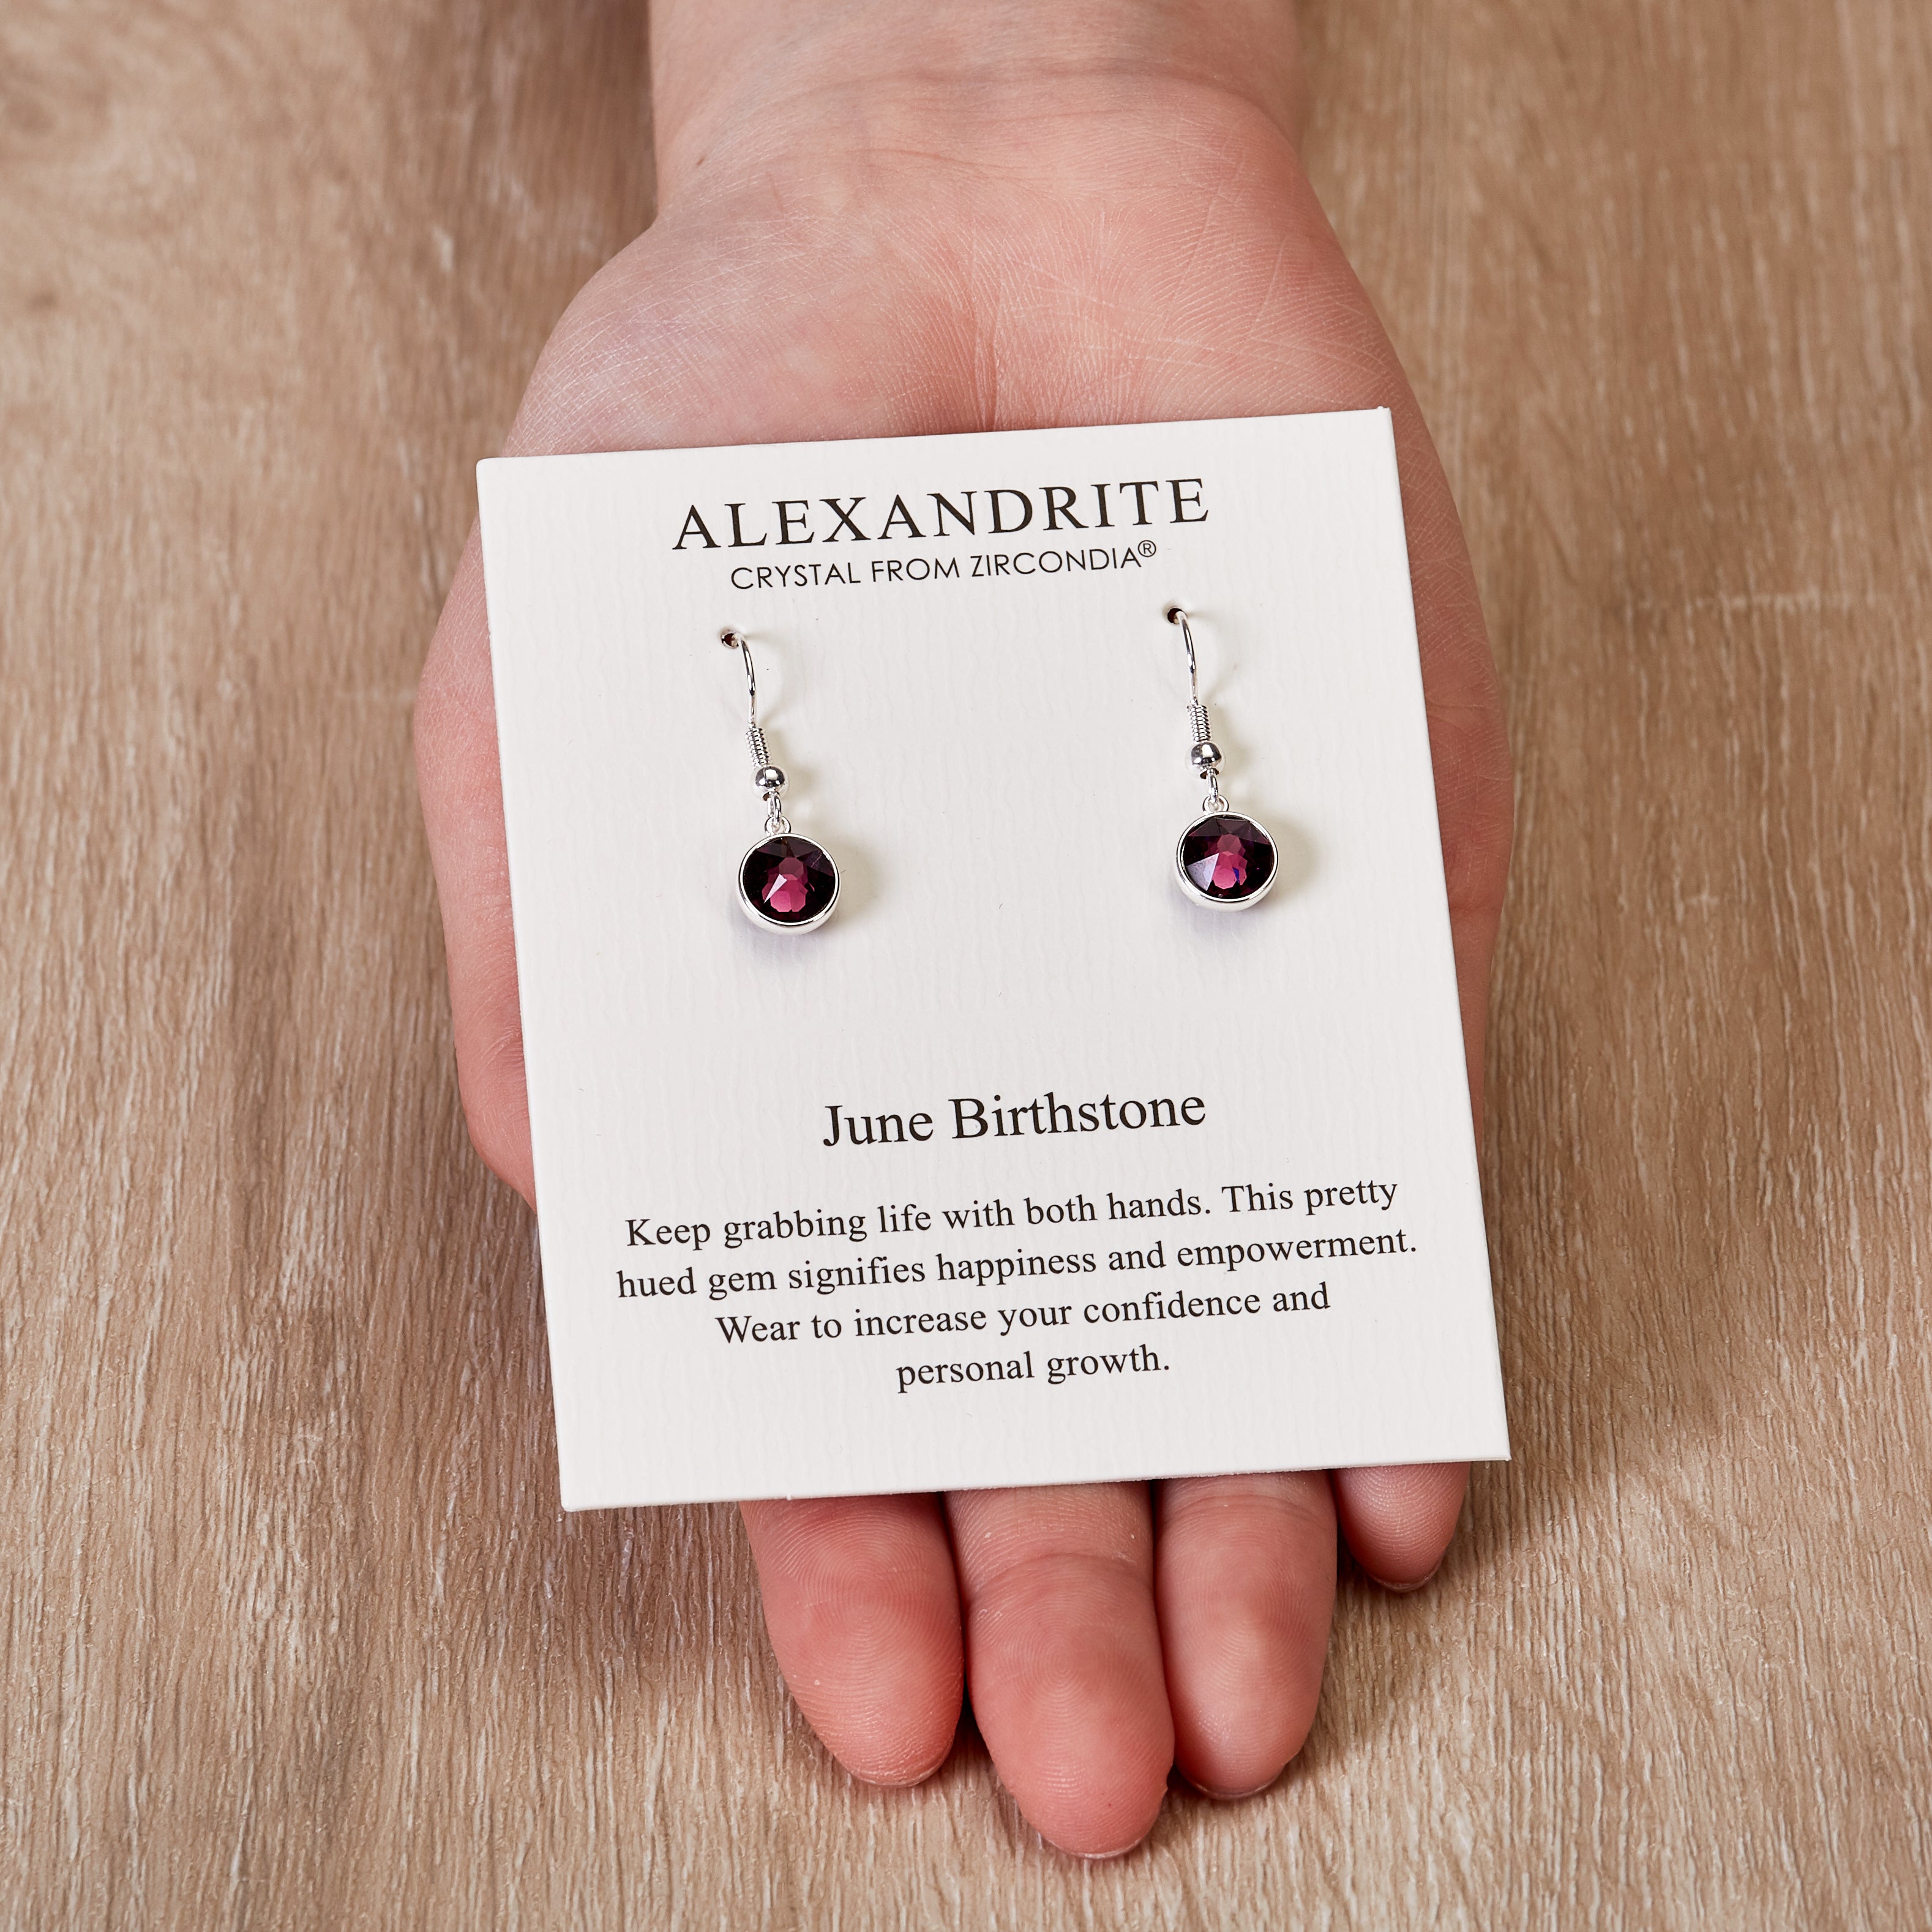 June Birthstone Drop Earrings Created with Alexandrite Zircondia® Crystals